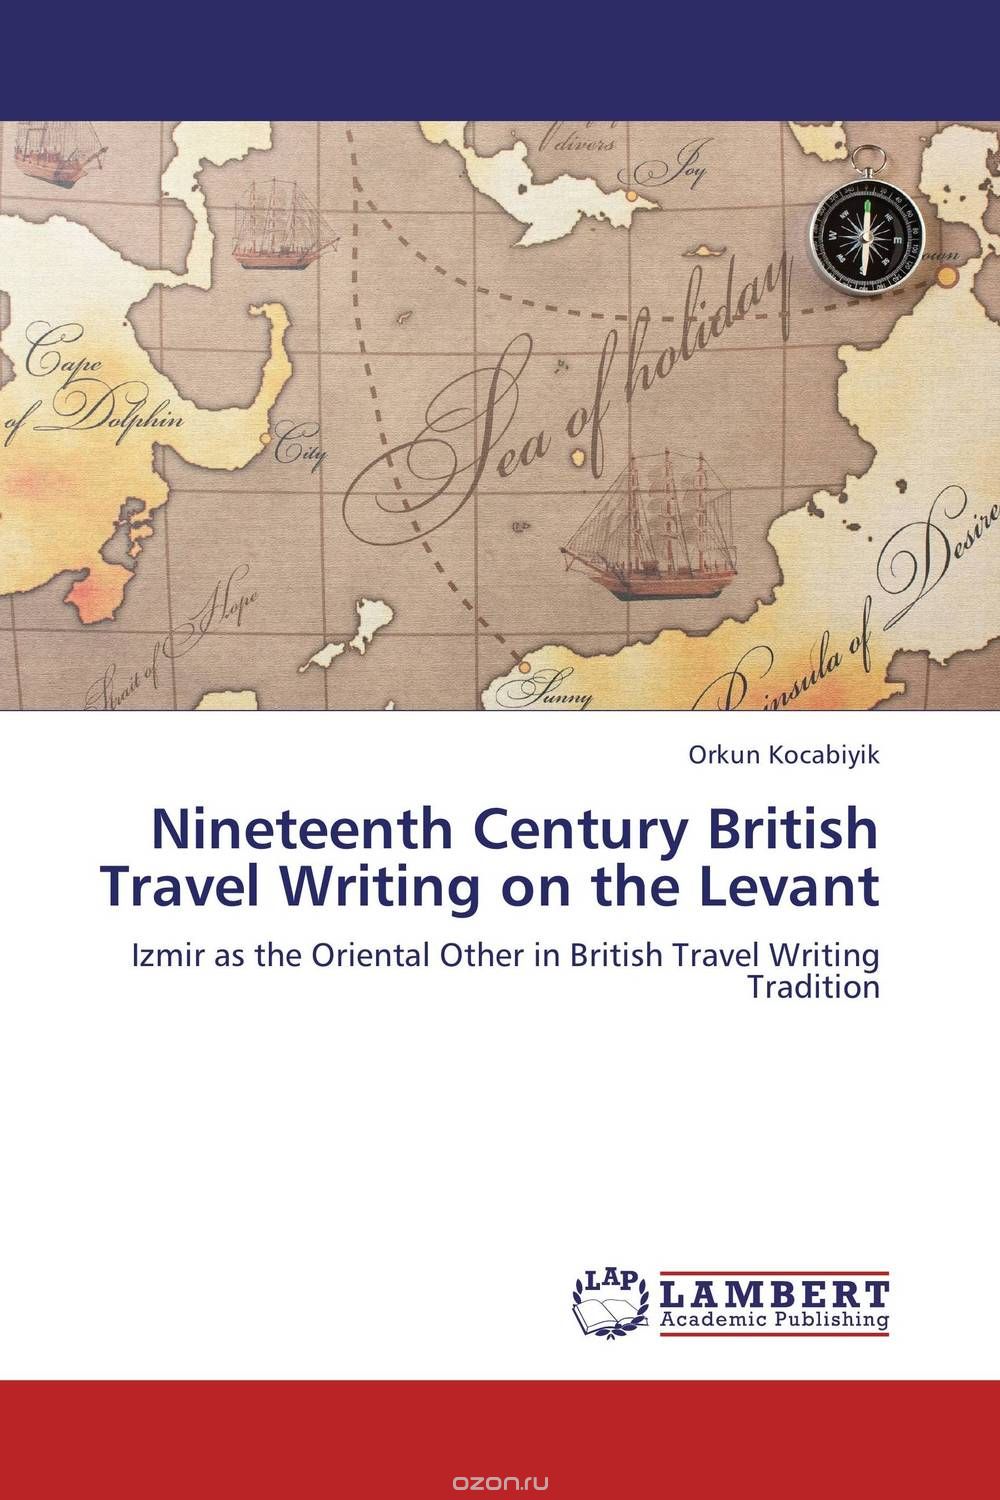 Nineteenth Century British Travel Writing on the Levant